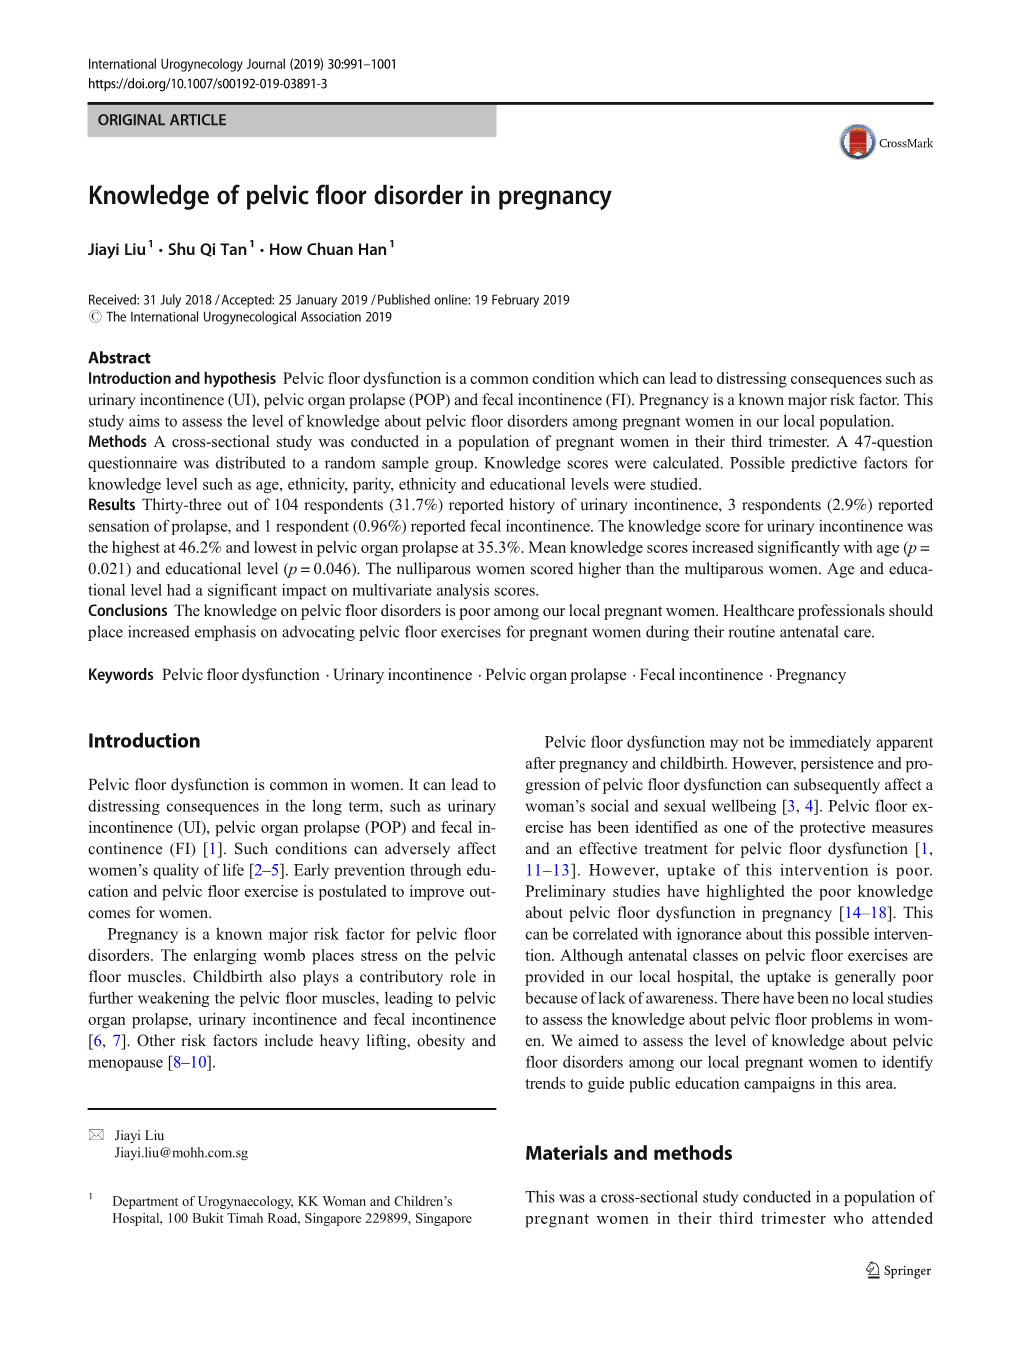 Knowledge of Pelvic Floor Disorder in Pregnancy